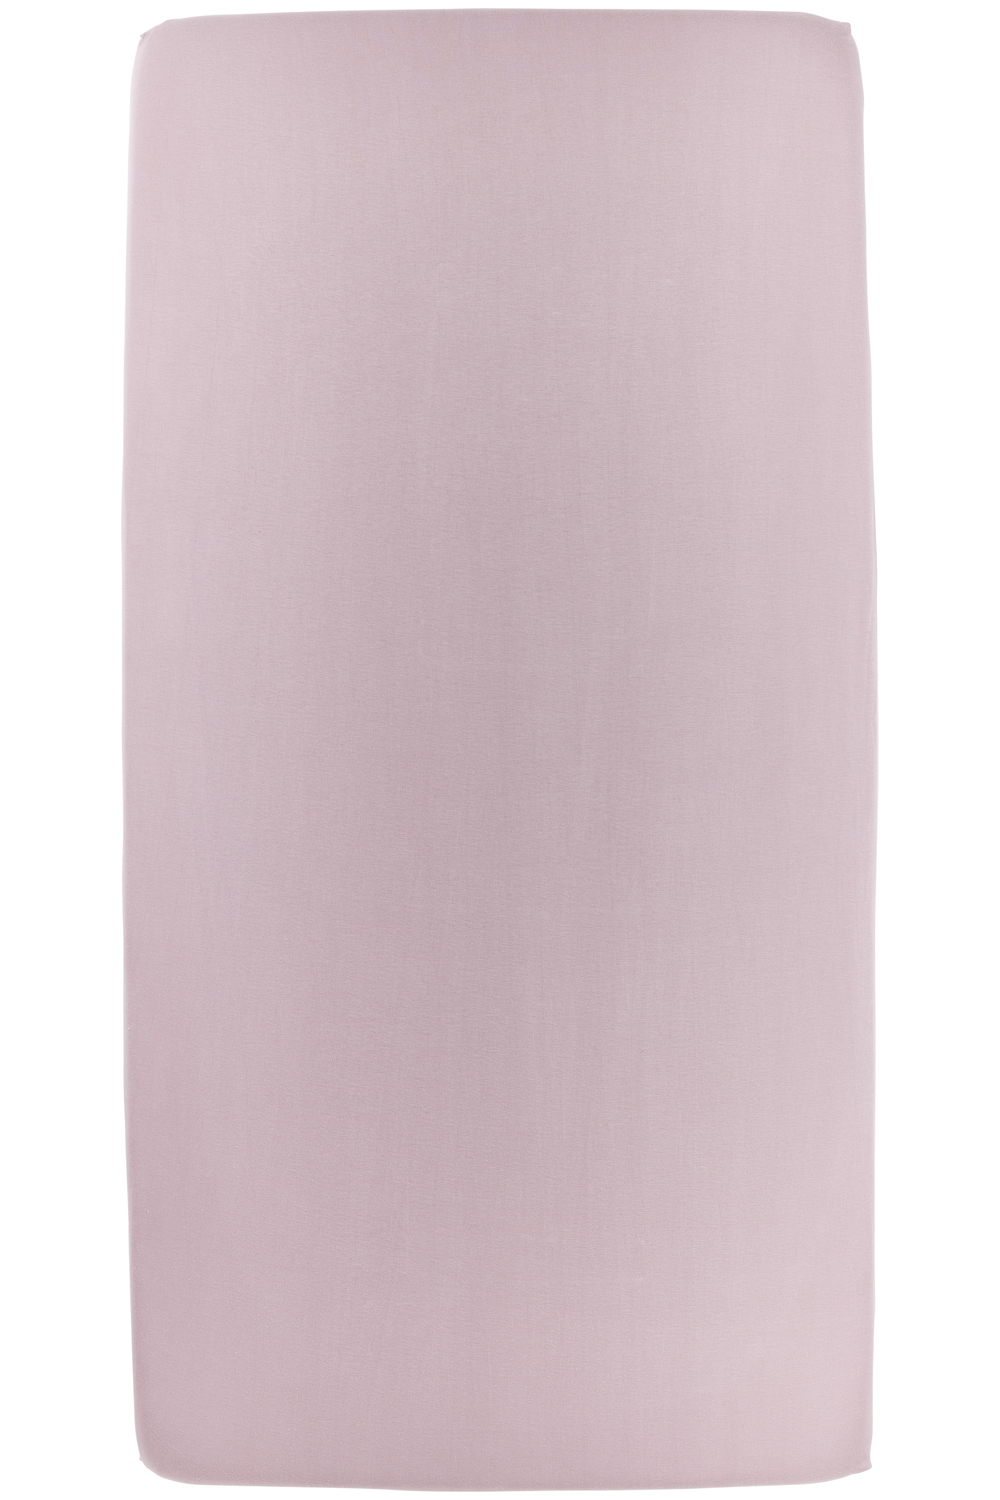 Jersey Hoeslaken - Lilac - 70x140/150cm